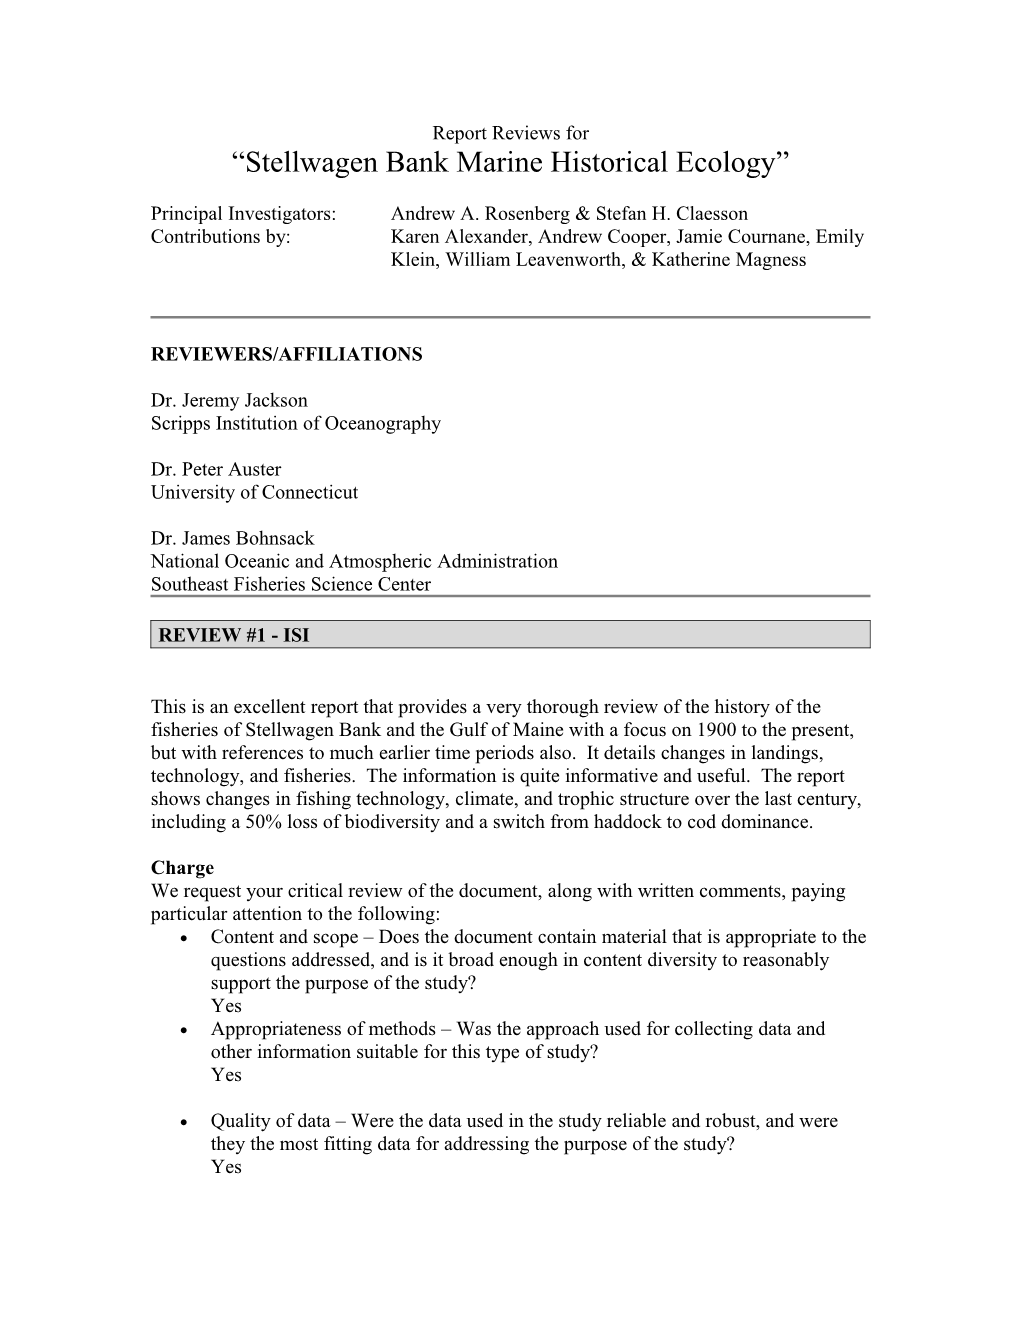 Review of Stellwagen Bank Marine Historical Ecology: Final Report